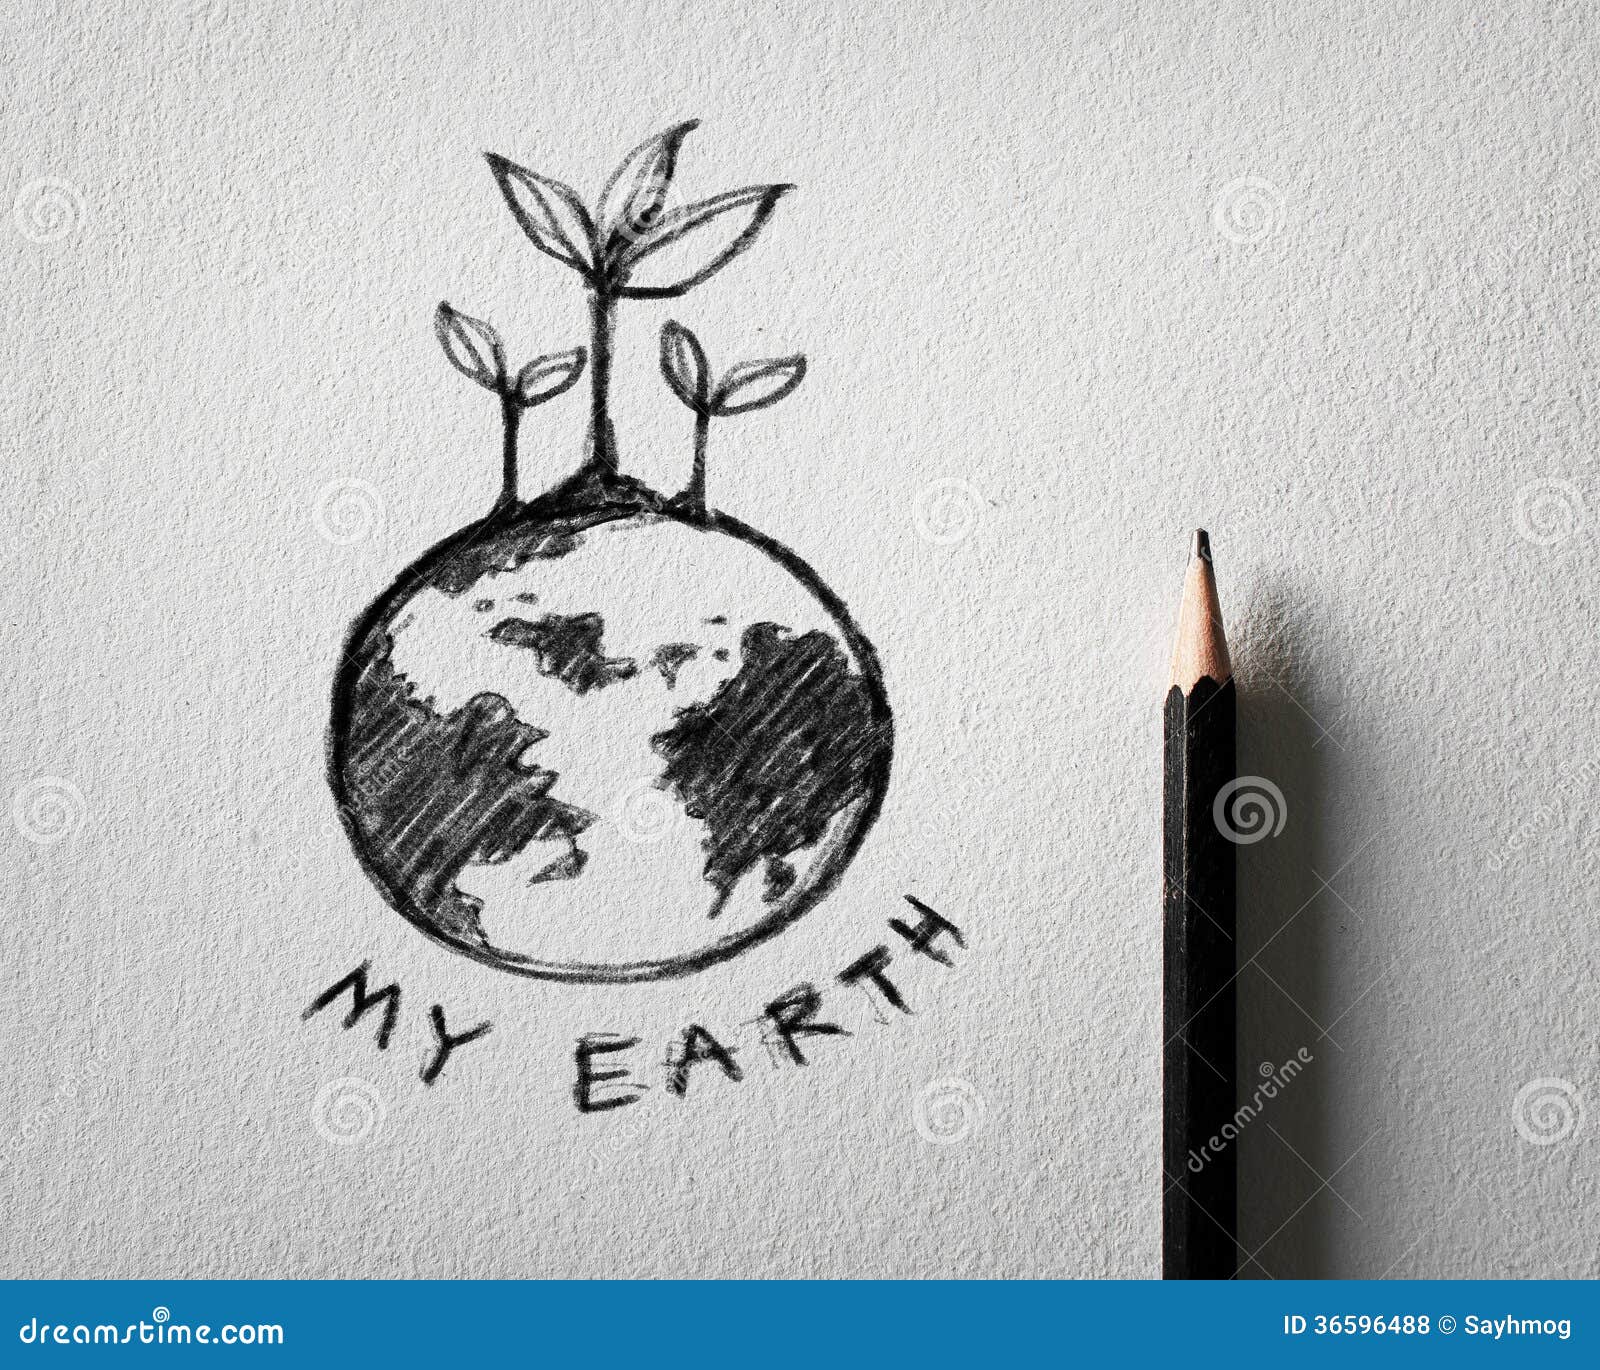 Save earth pencil drawing : r/drawing-saigonsouth.com.vn